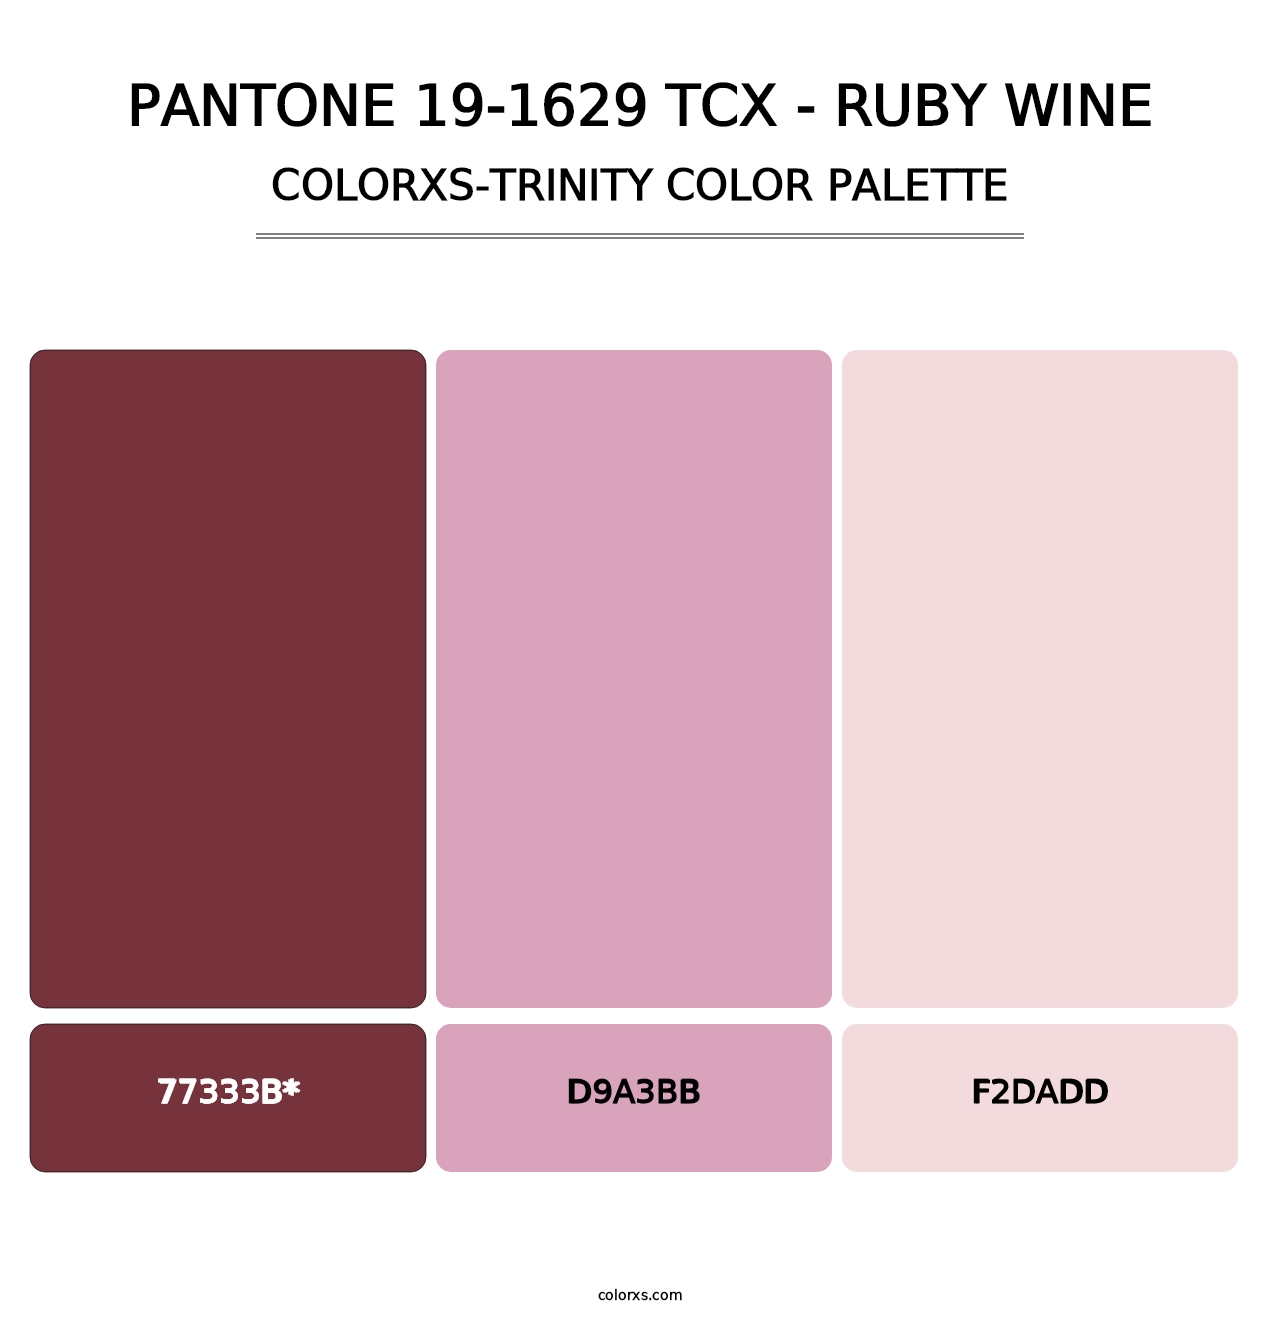 PANTONE 19-1629 TCX - Ruby Wine - Colorxs Trinity Palette